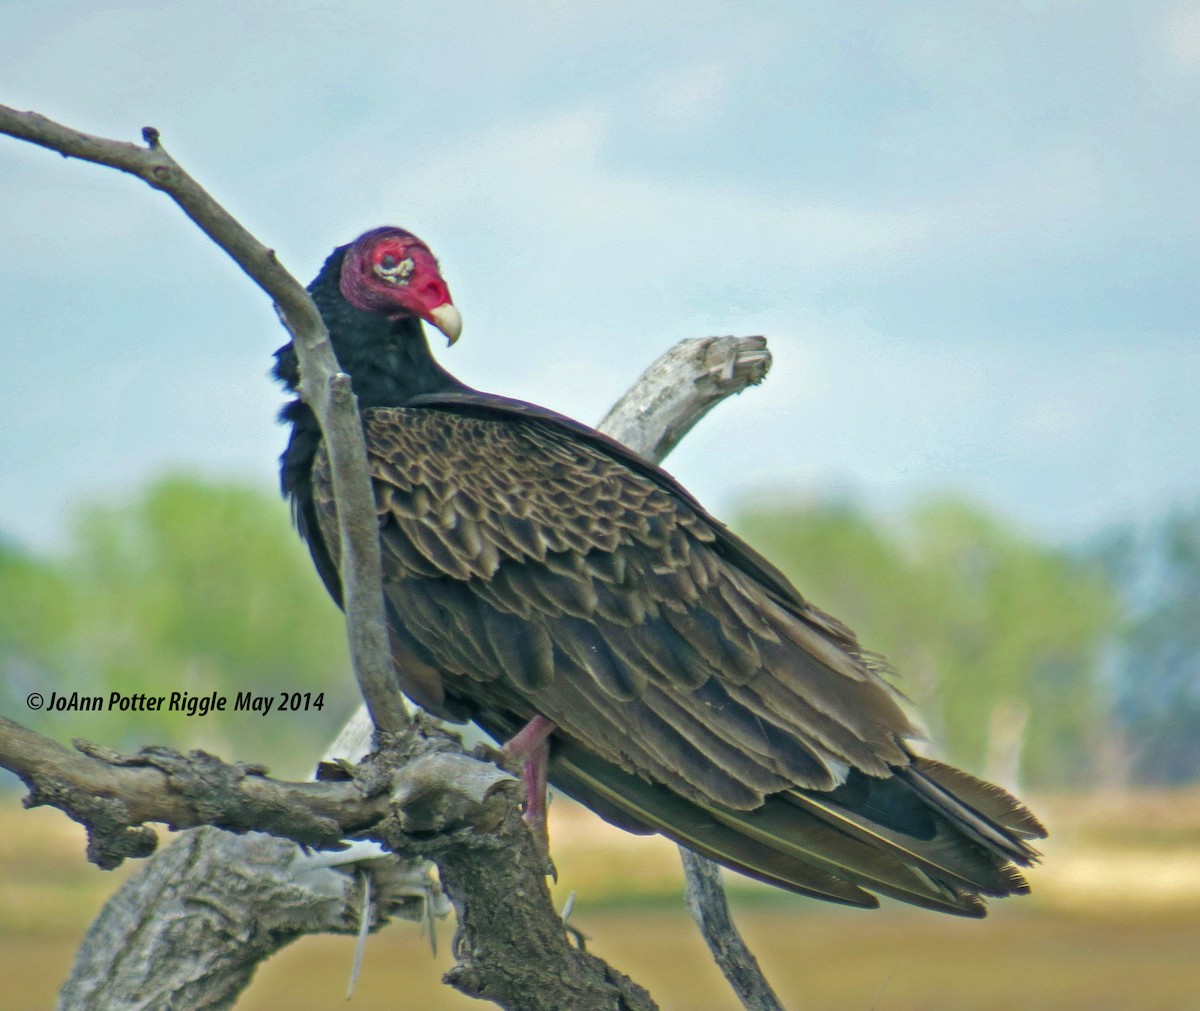 Turkey Vulture - JoAnn Potter Riggle 🦤